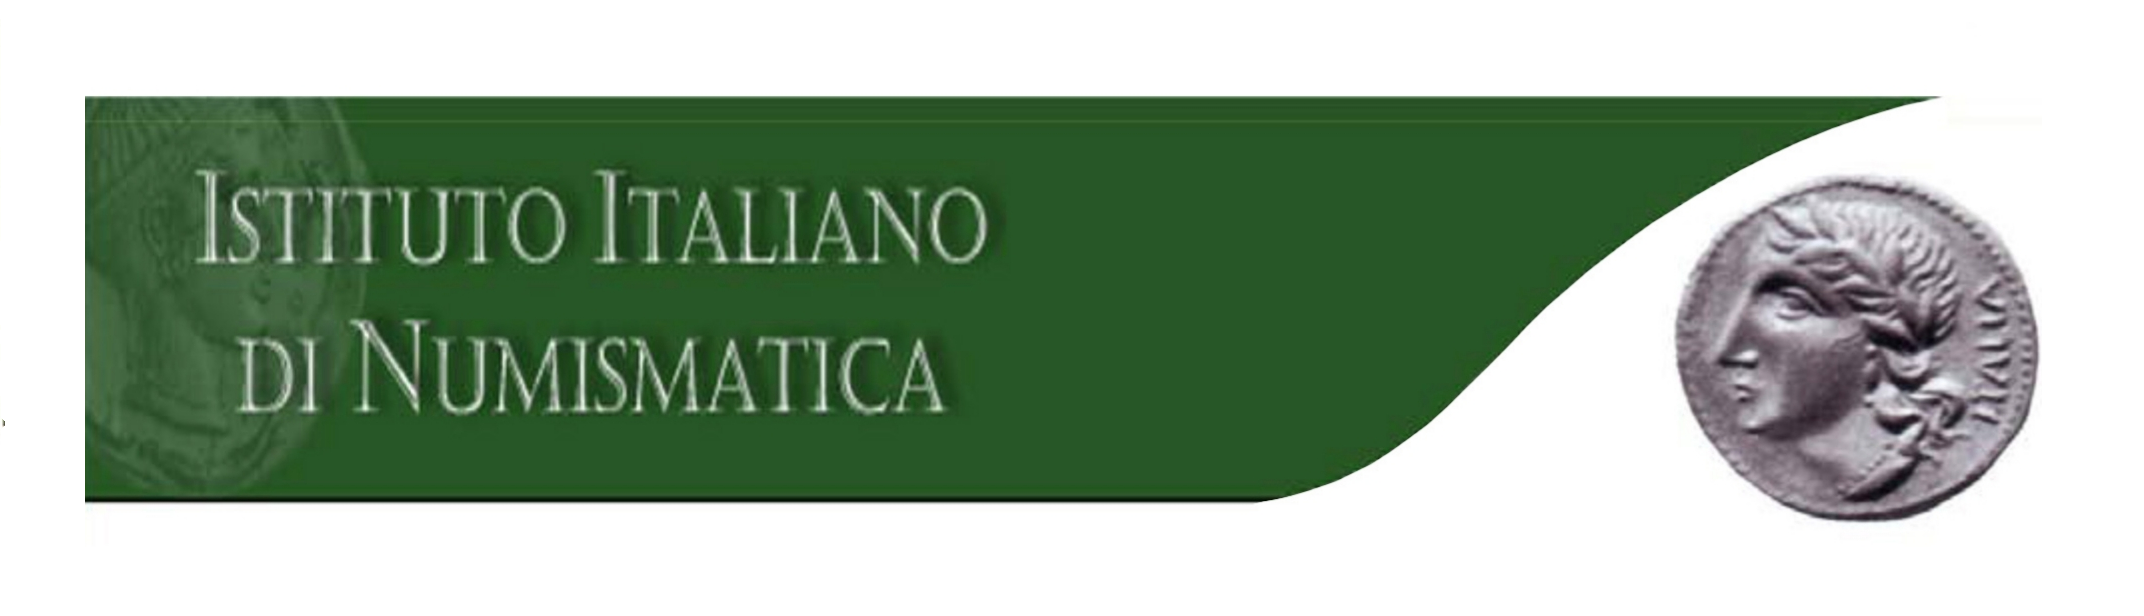 Biblioteca Istituto italiano di numismatica